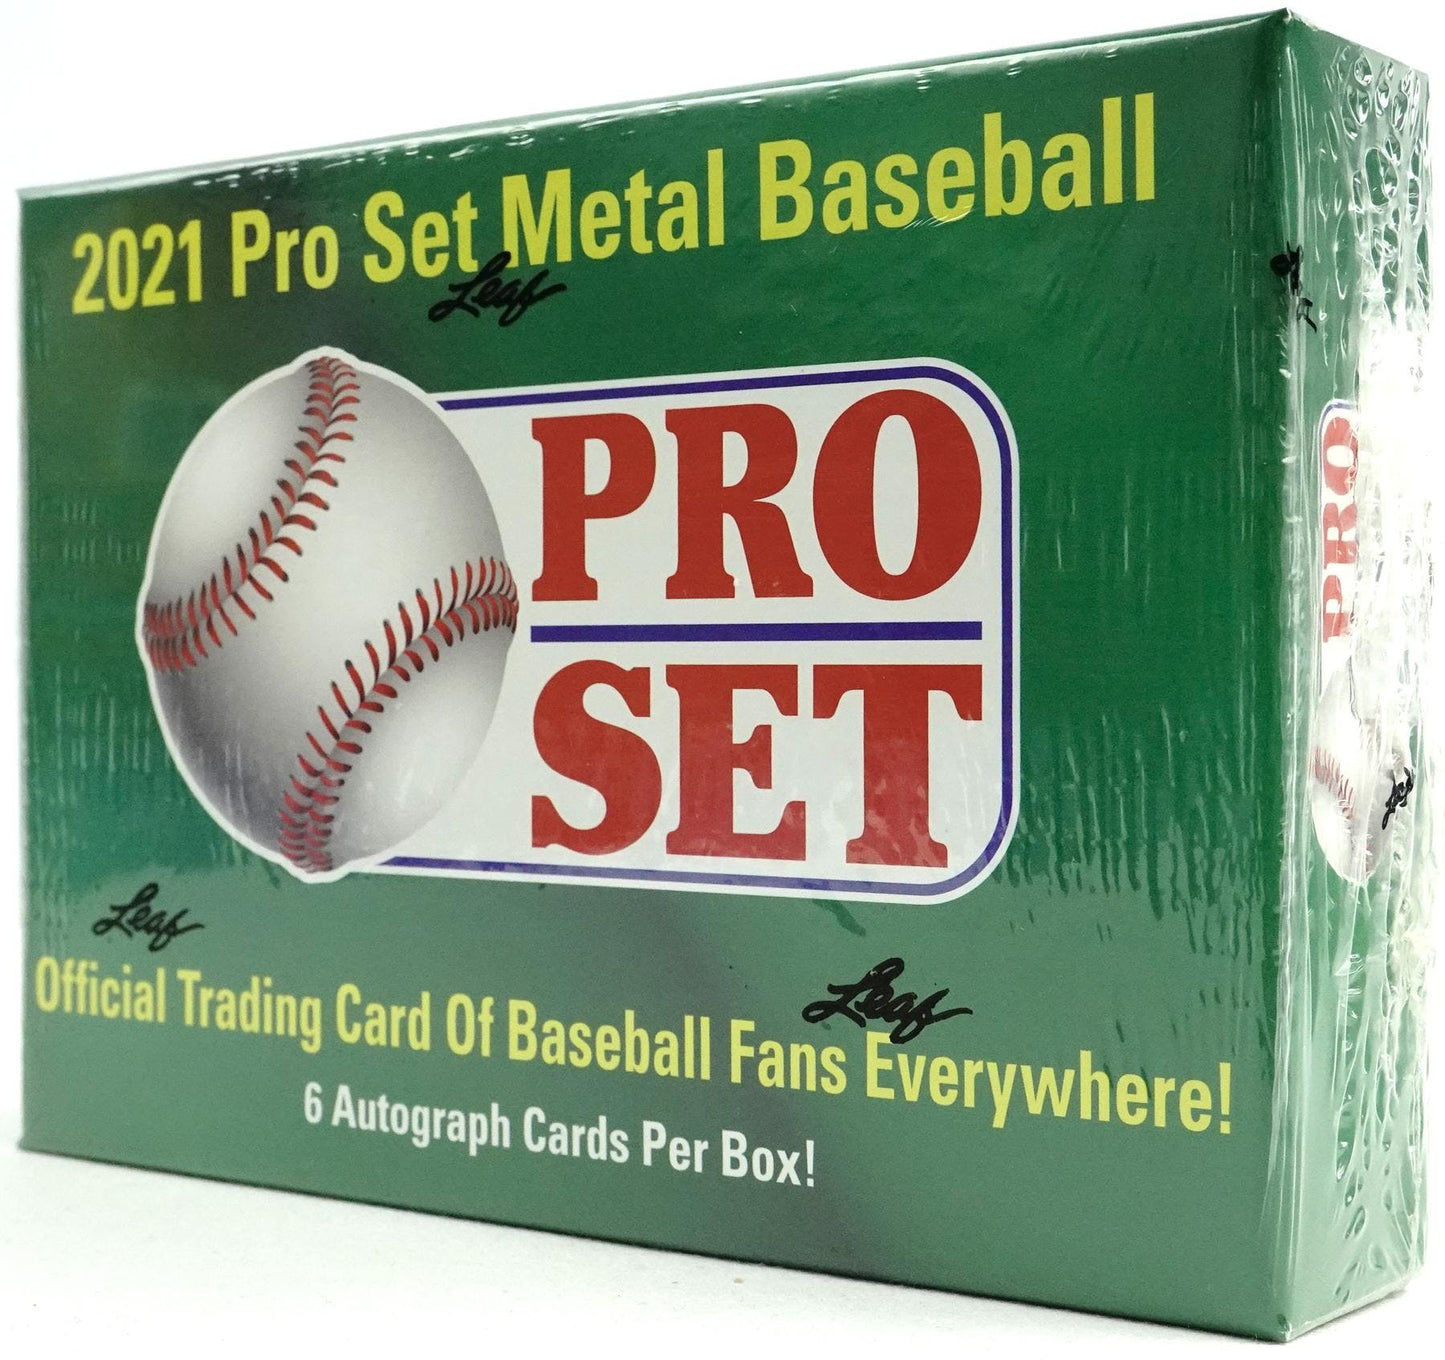 2021 Leaf Pro Set Metall Baseball box (SIX Autograph cards/bx)